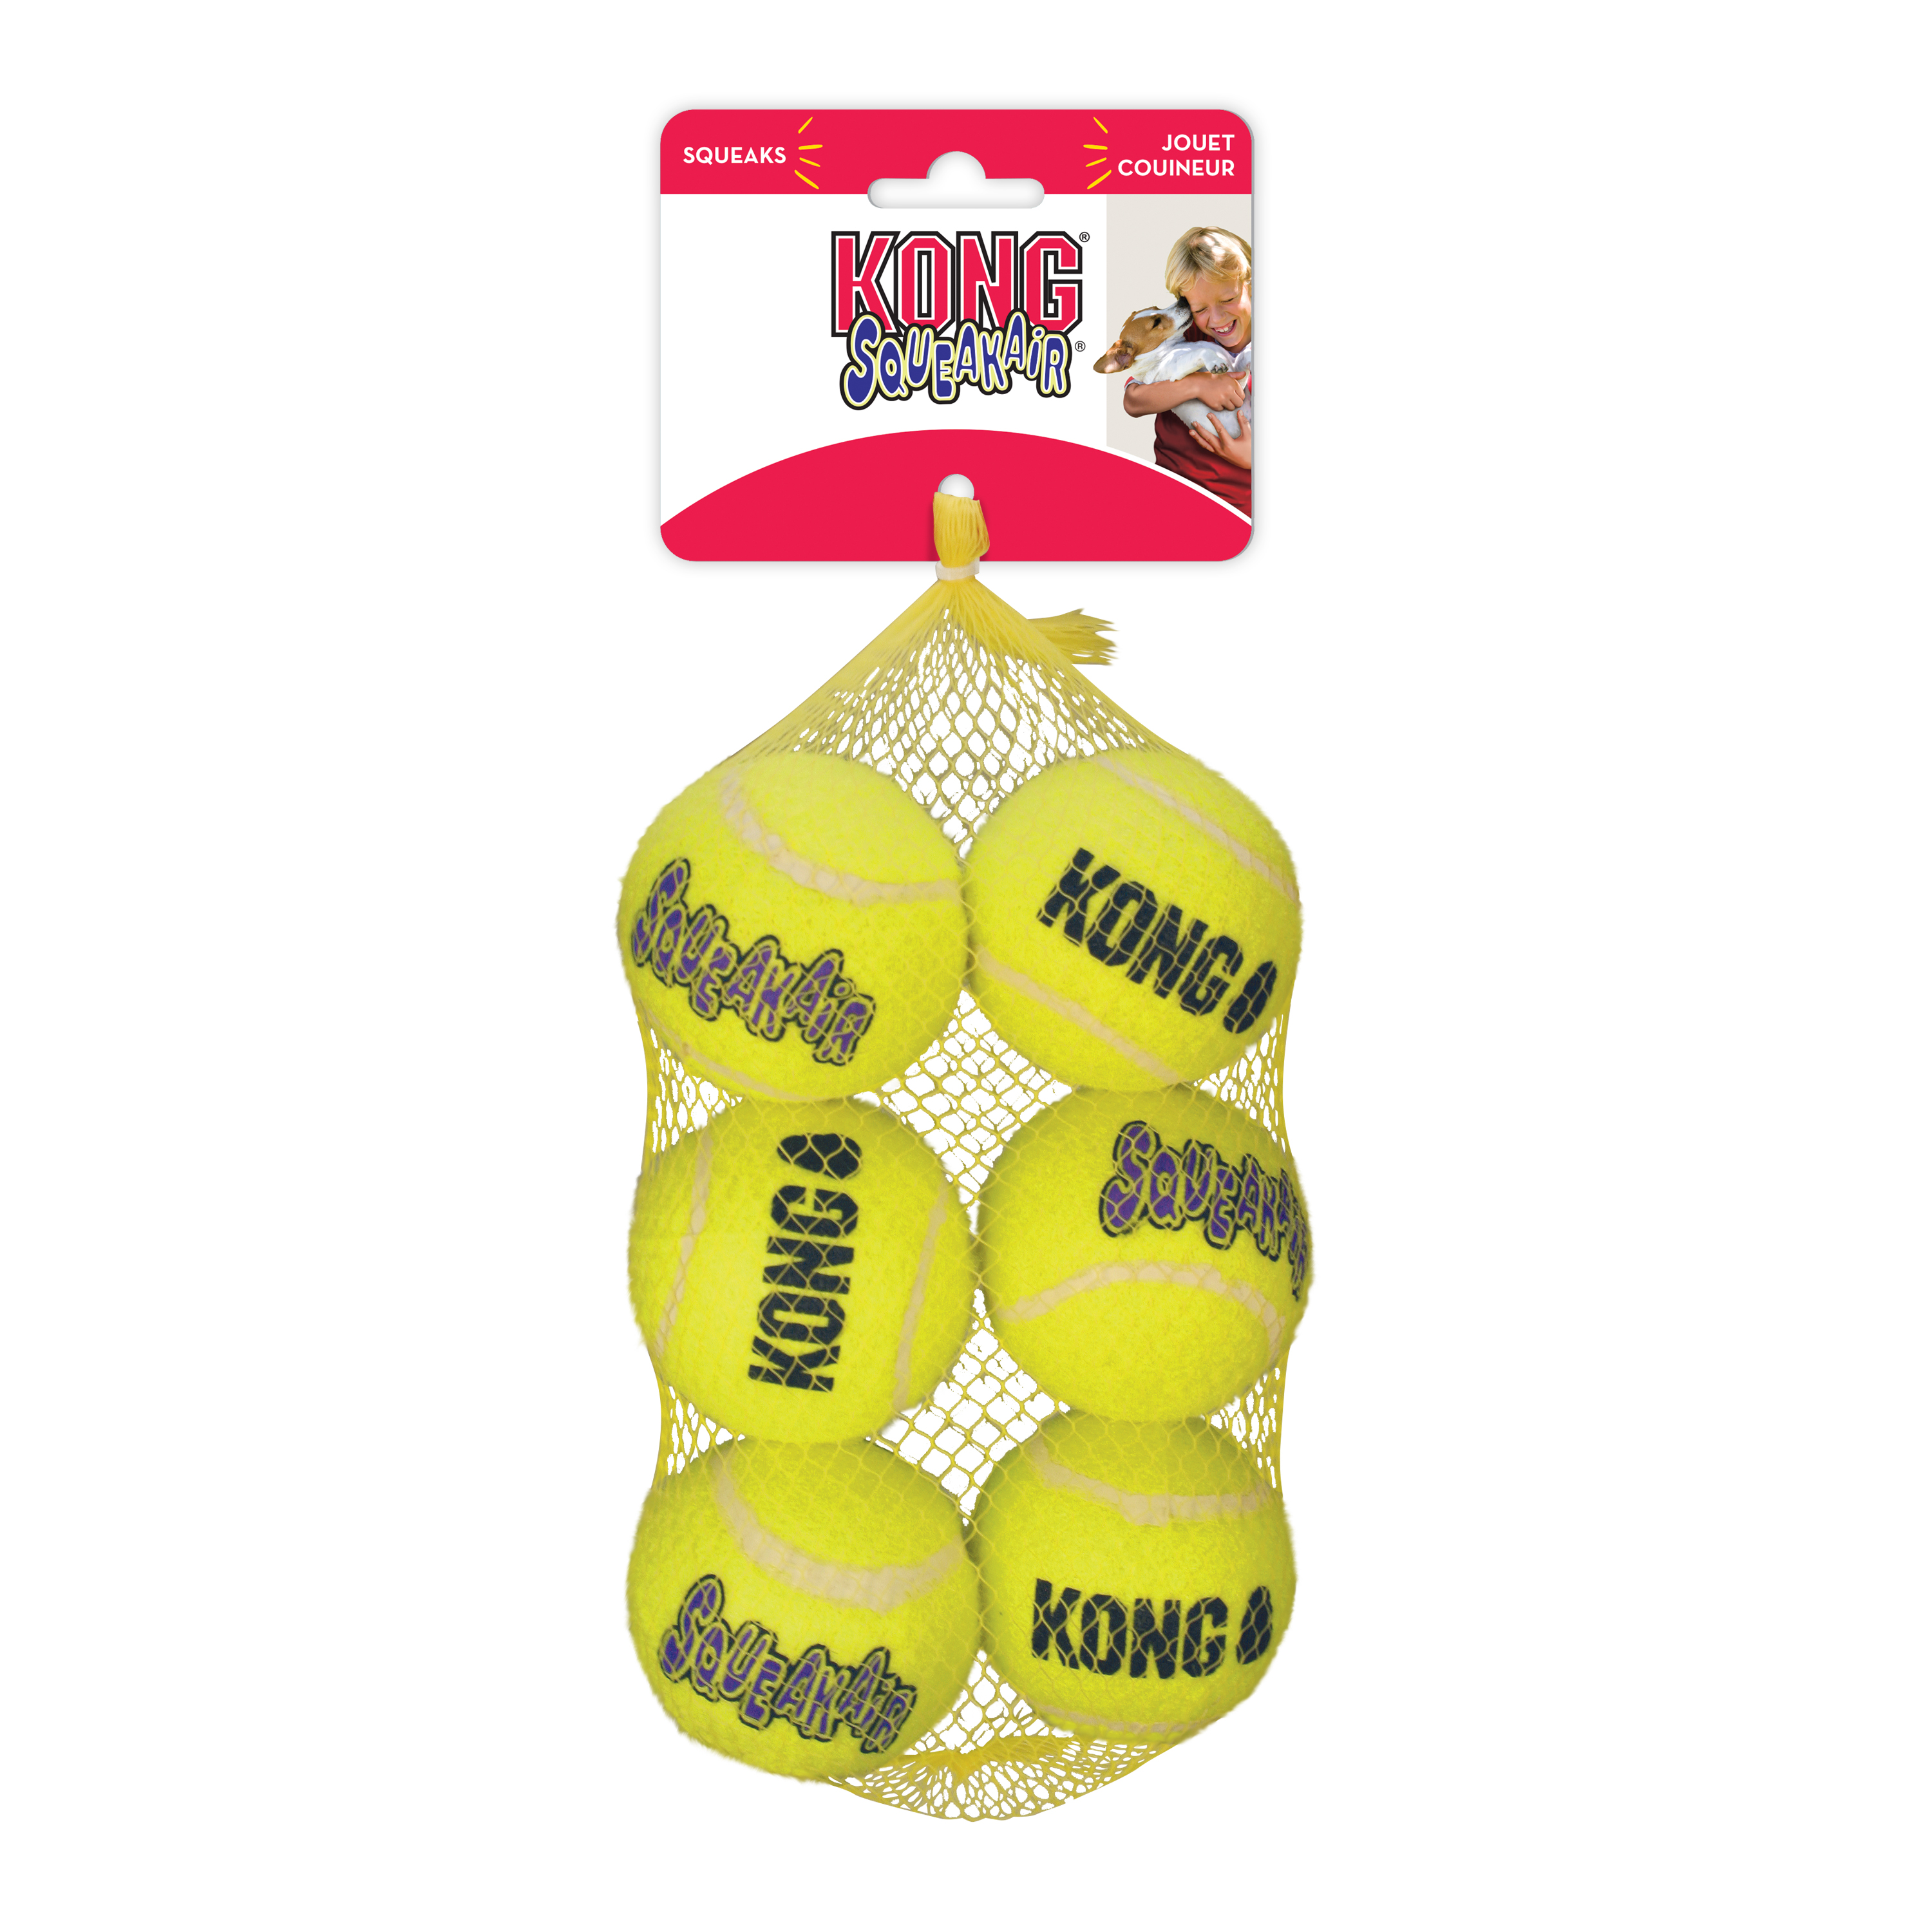 Kong squeakair balls 6-pack yellow - Product shot